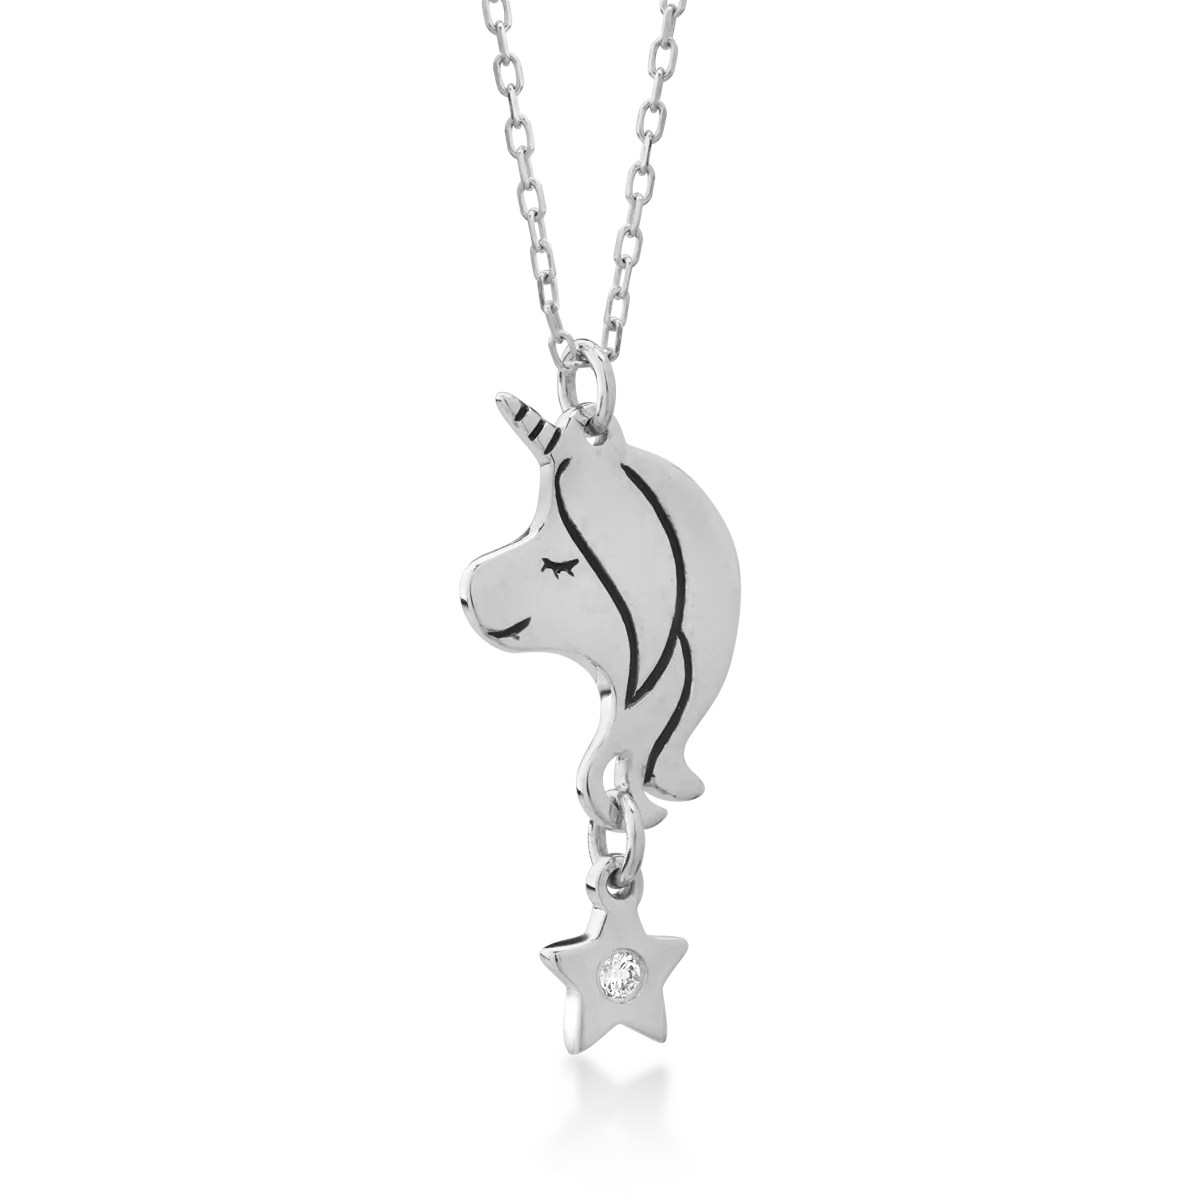 14K white gold unicorn children's pendant necklace with 0.006ct diamond